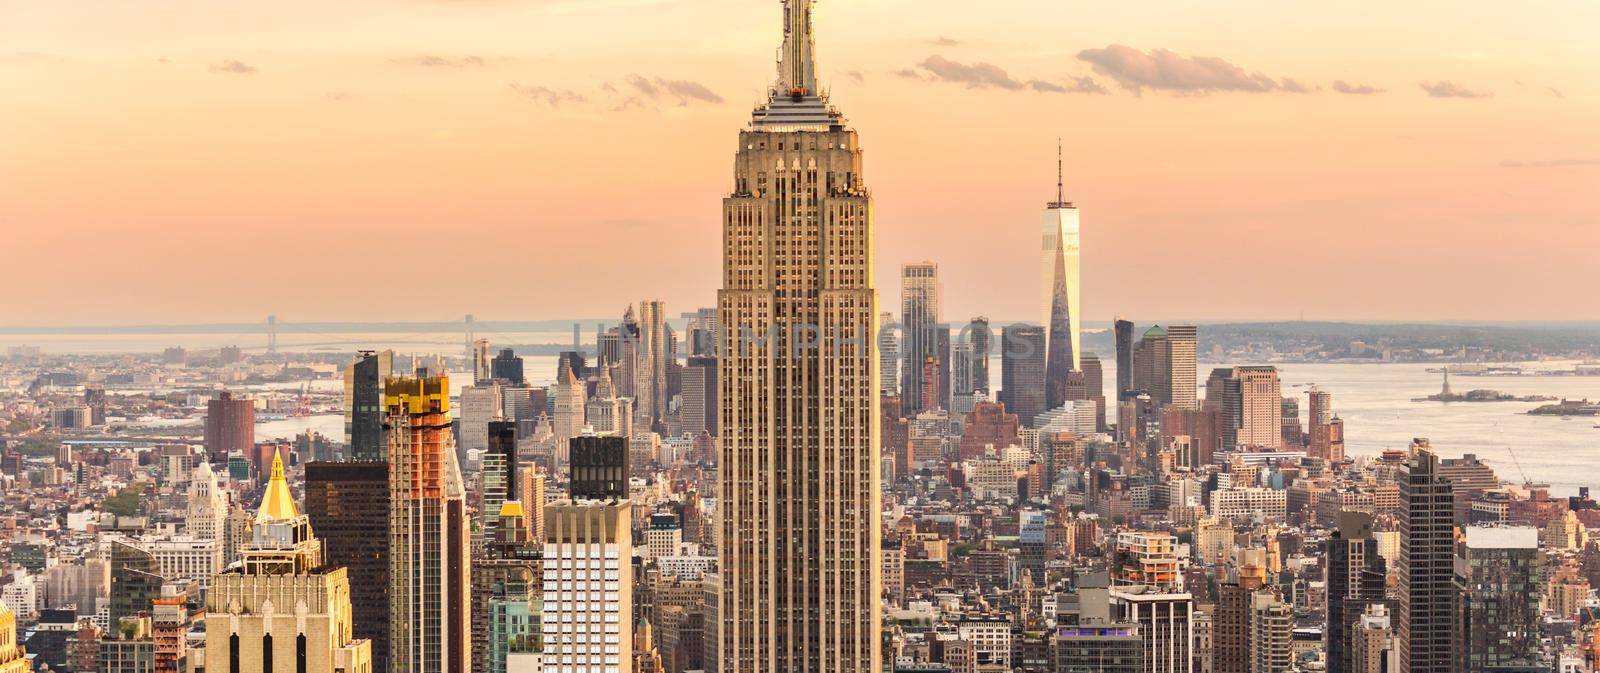 Panorama of New York city skyline at sunset by Mariakray